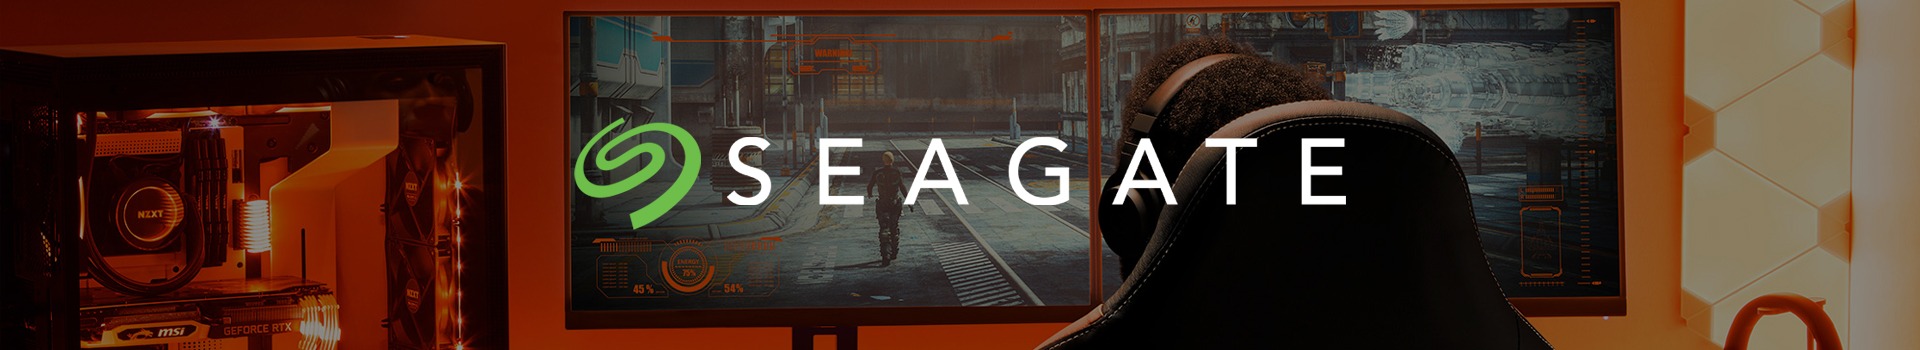 Seagate Gaming